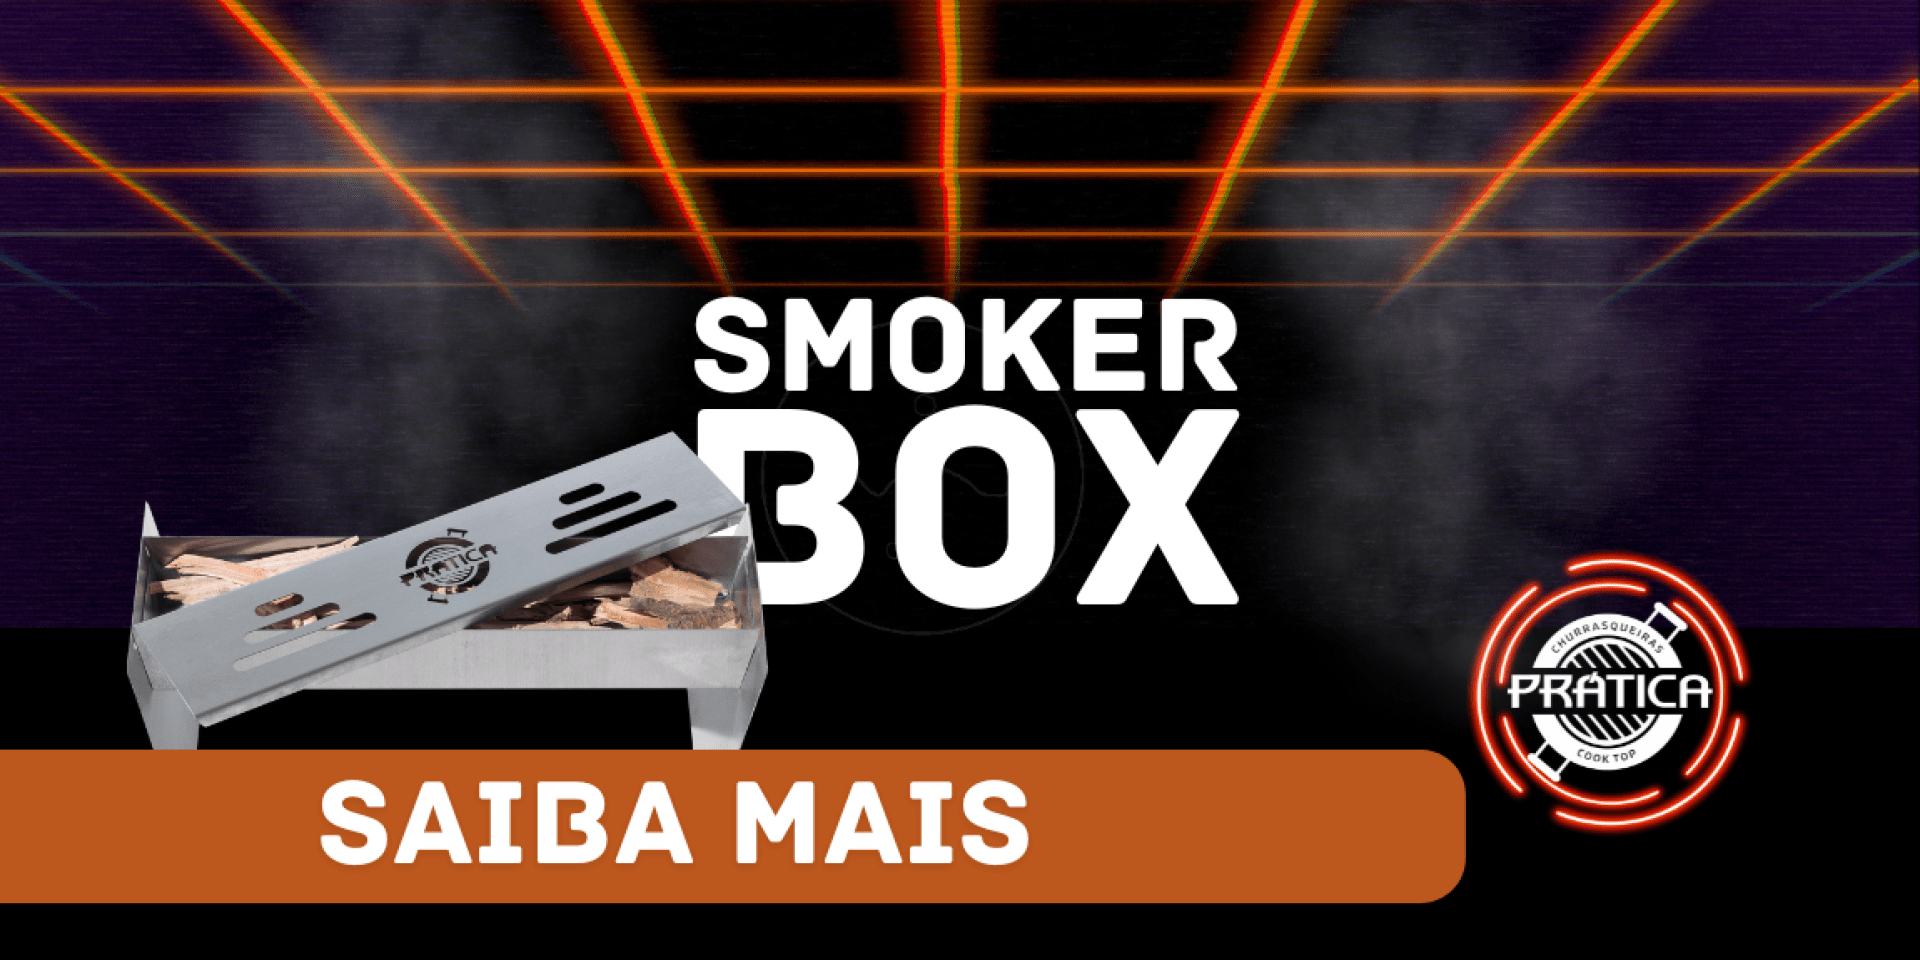 Smoker Box